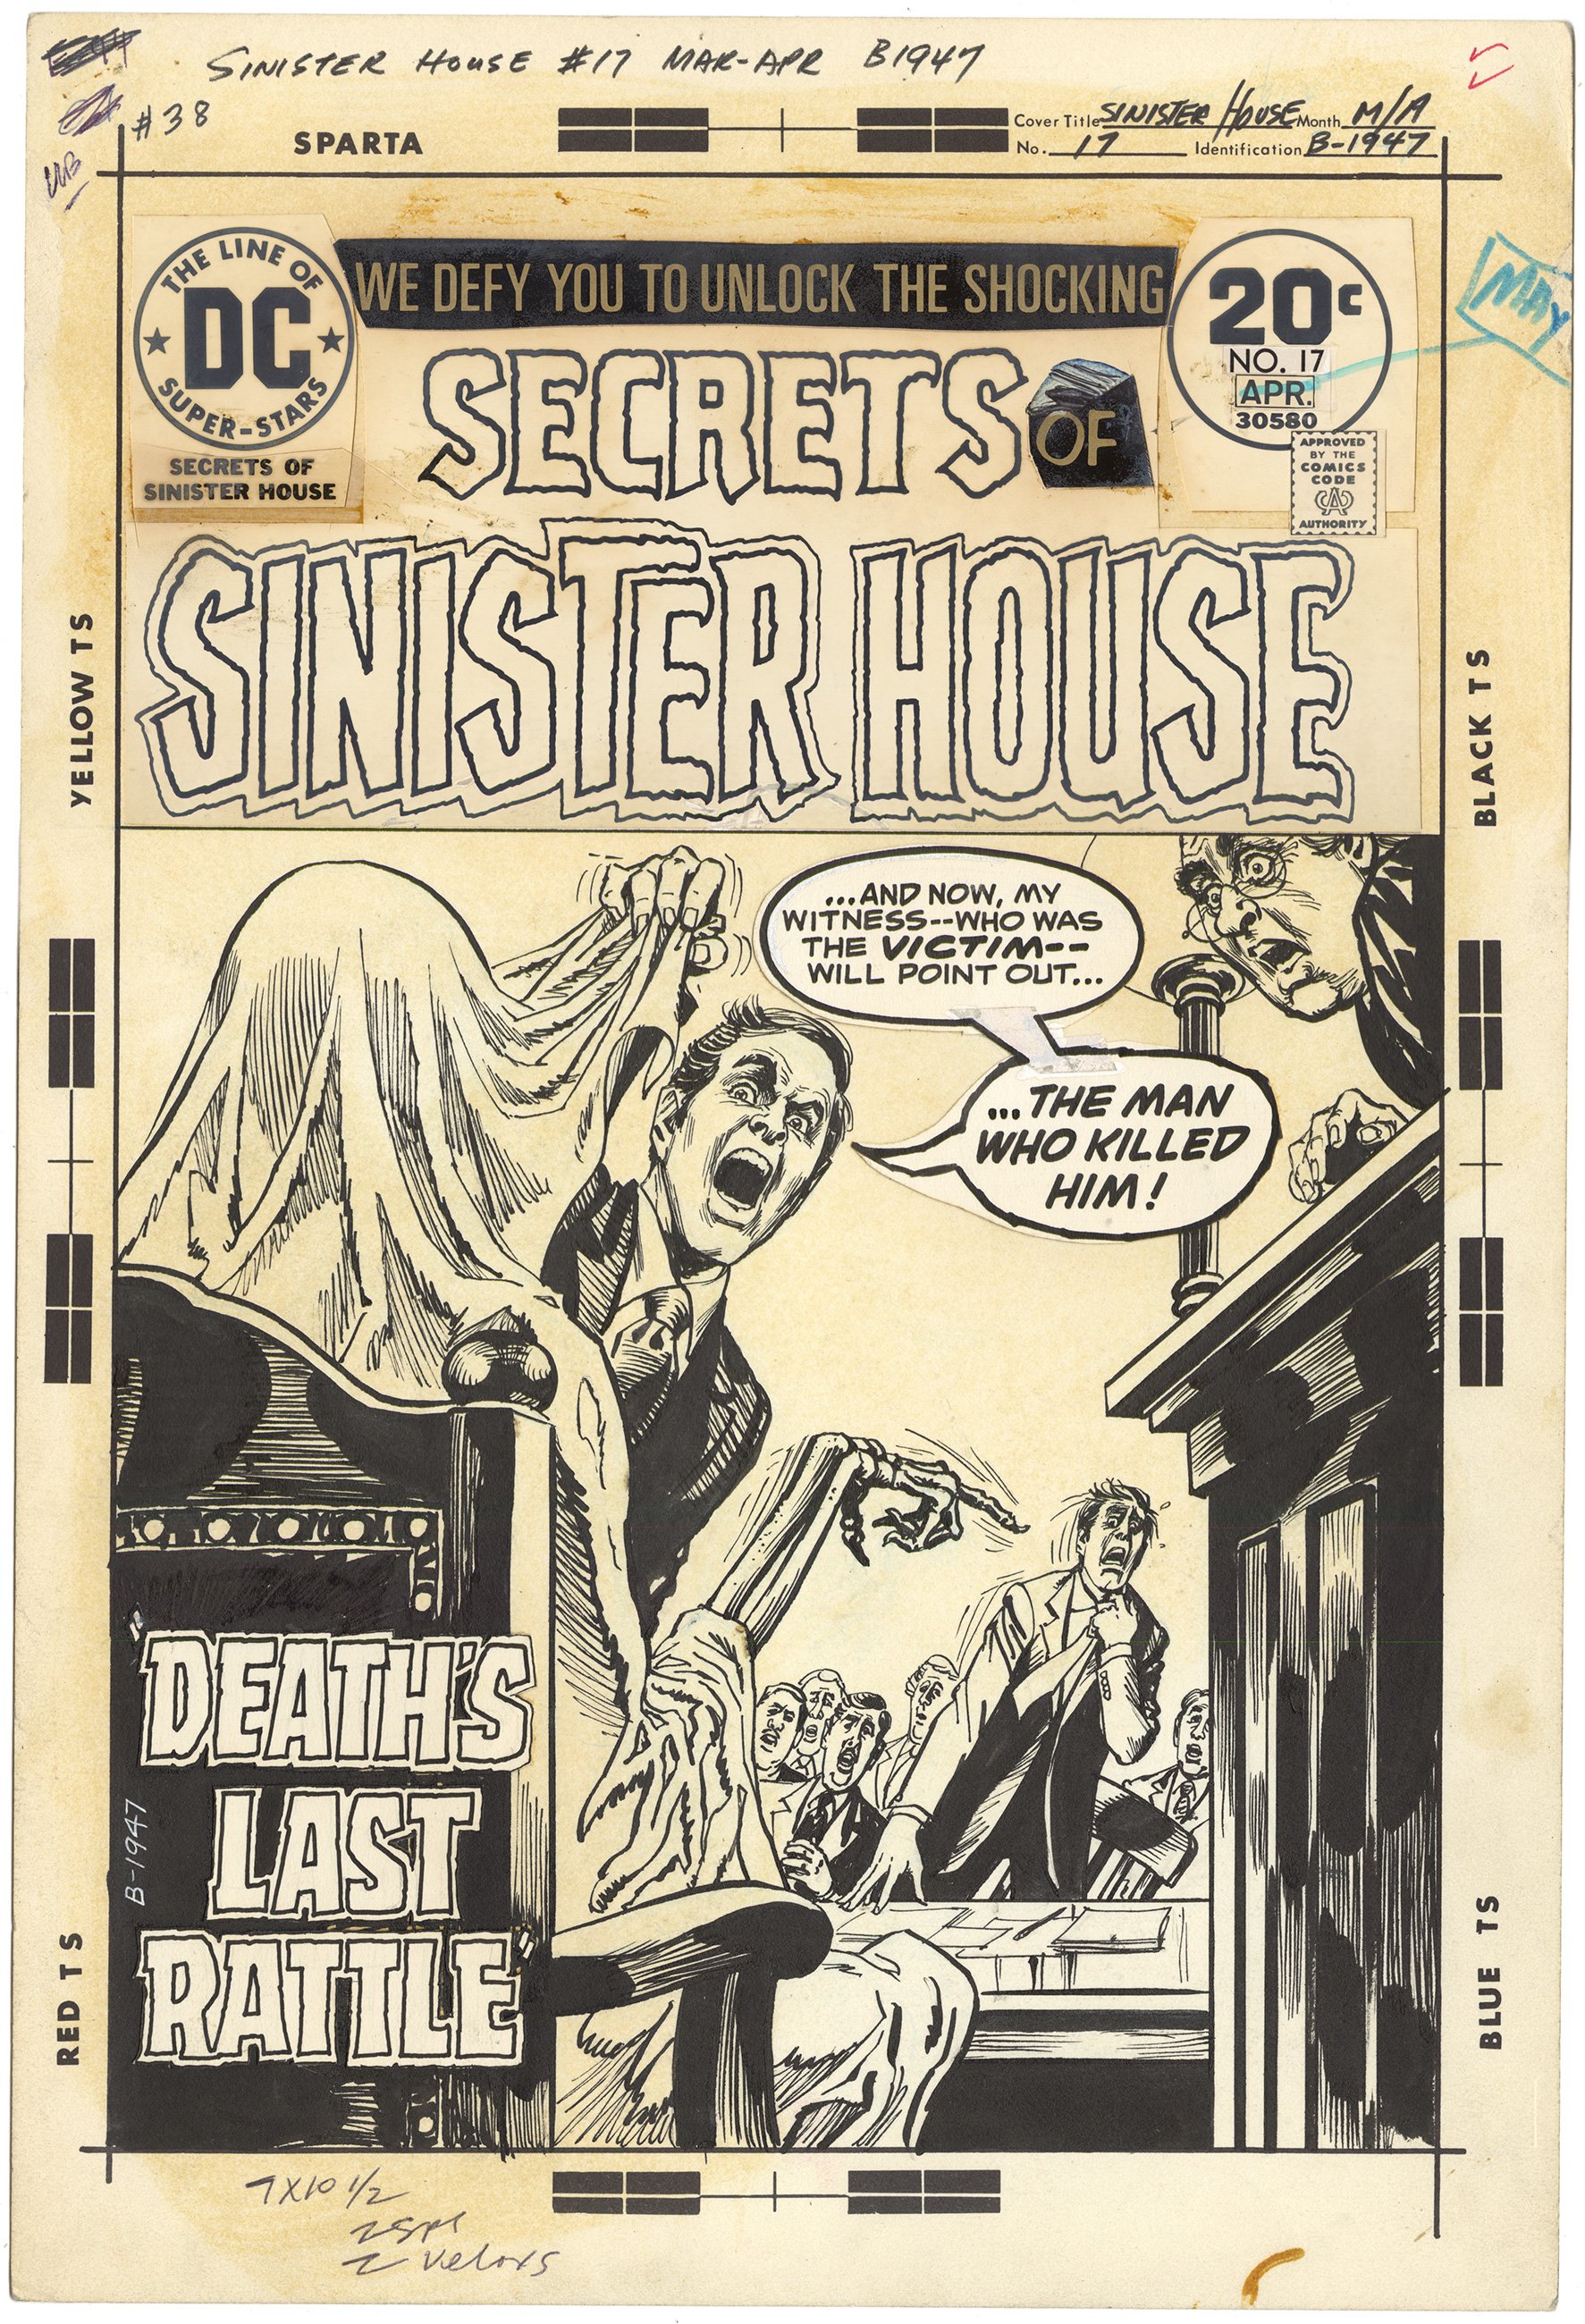 Secrets of Sinister House #17 Cover